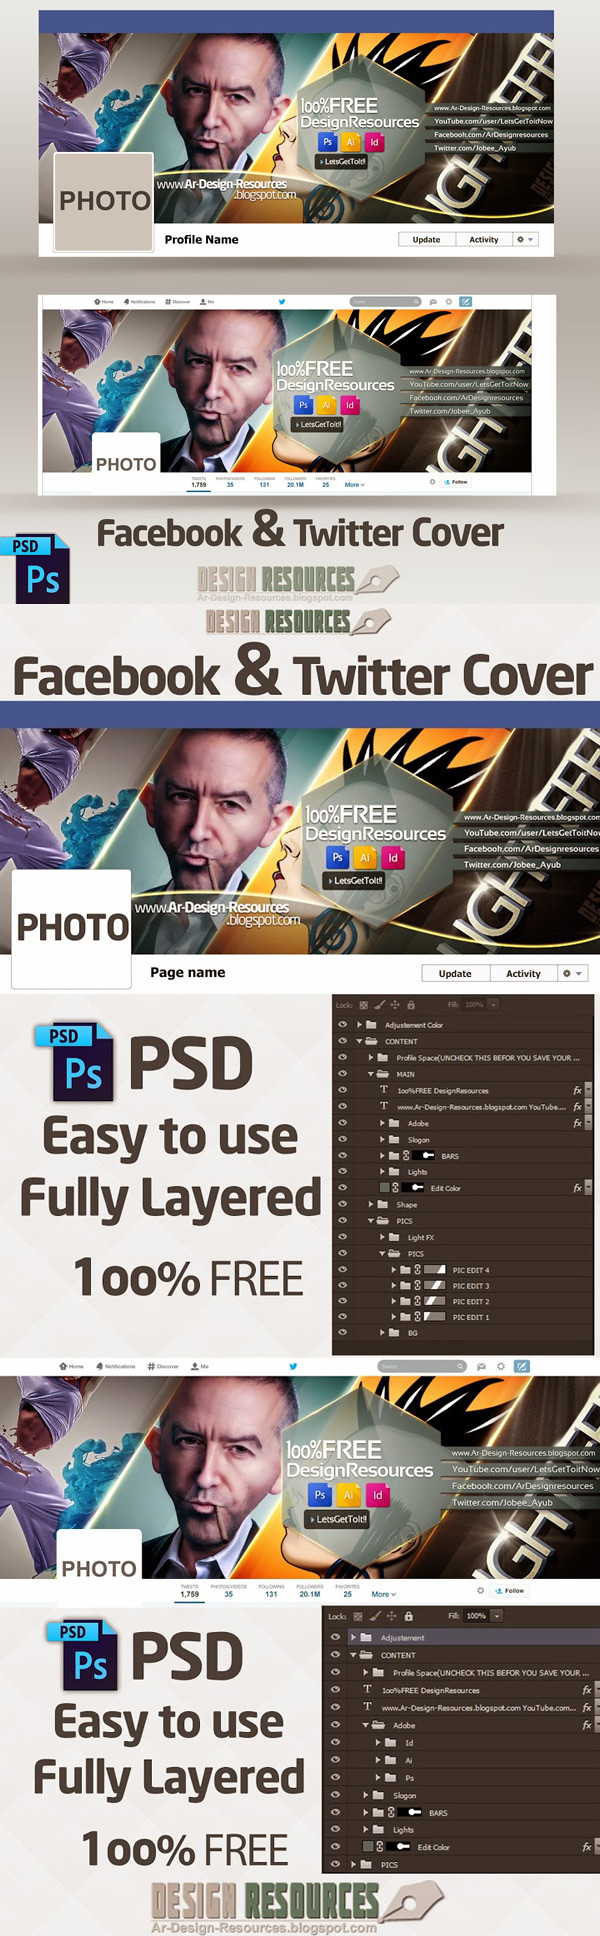 PSD исходник - Фейсбук и Твиттер